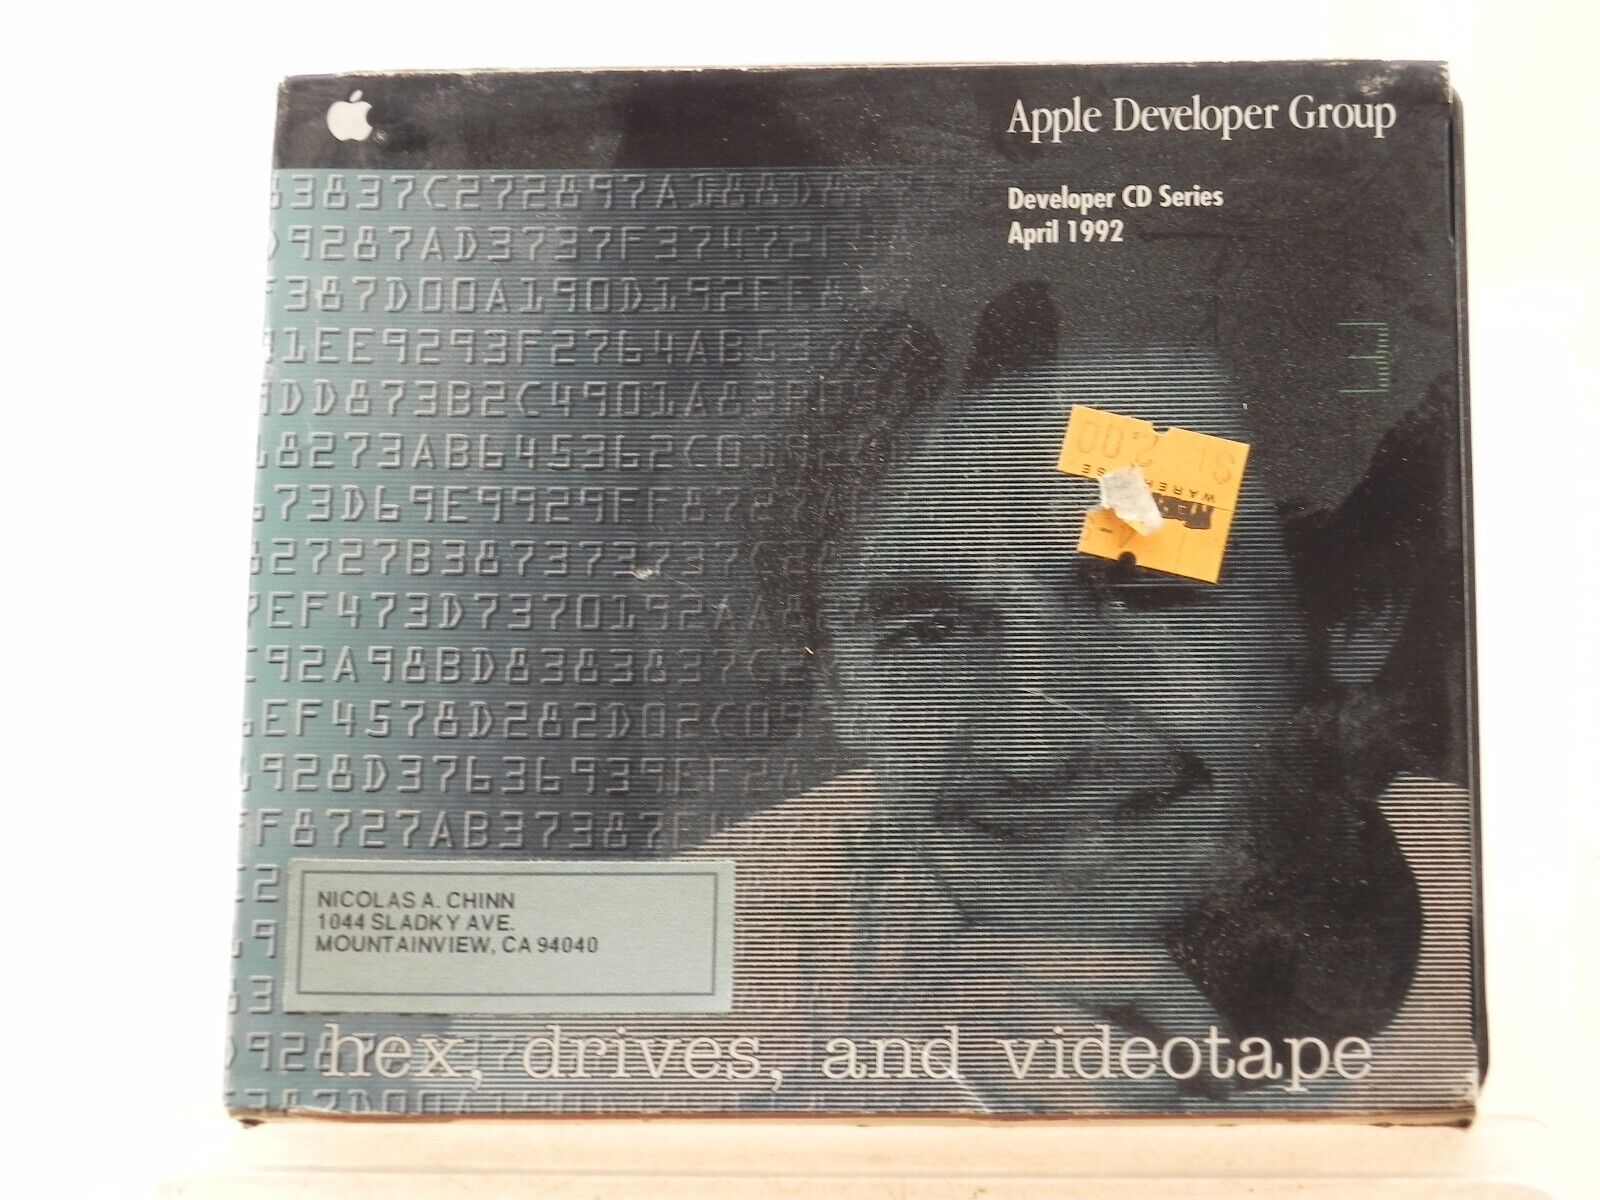 Apple Developer Group CD Series April 1992 - Hex, Drivers, and Videotape